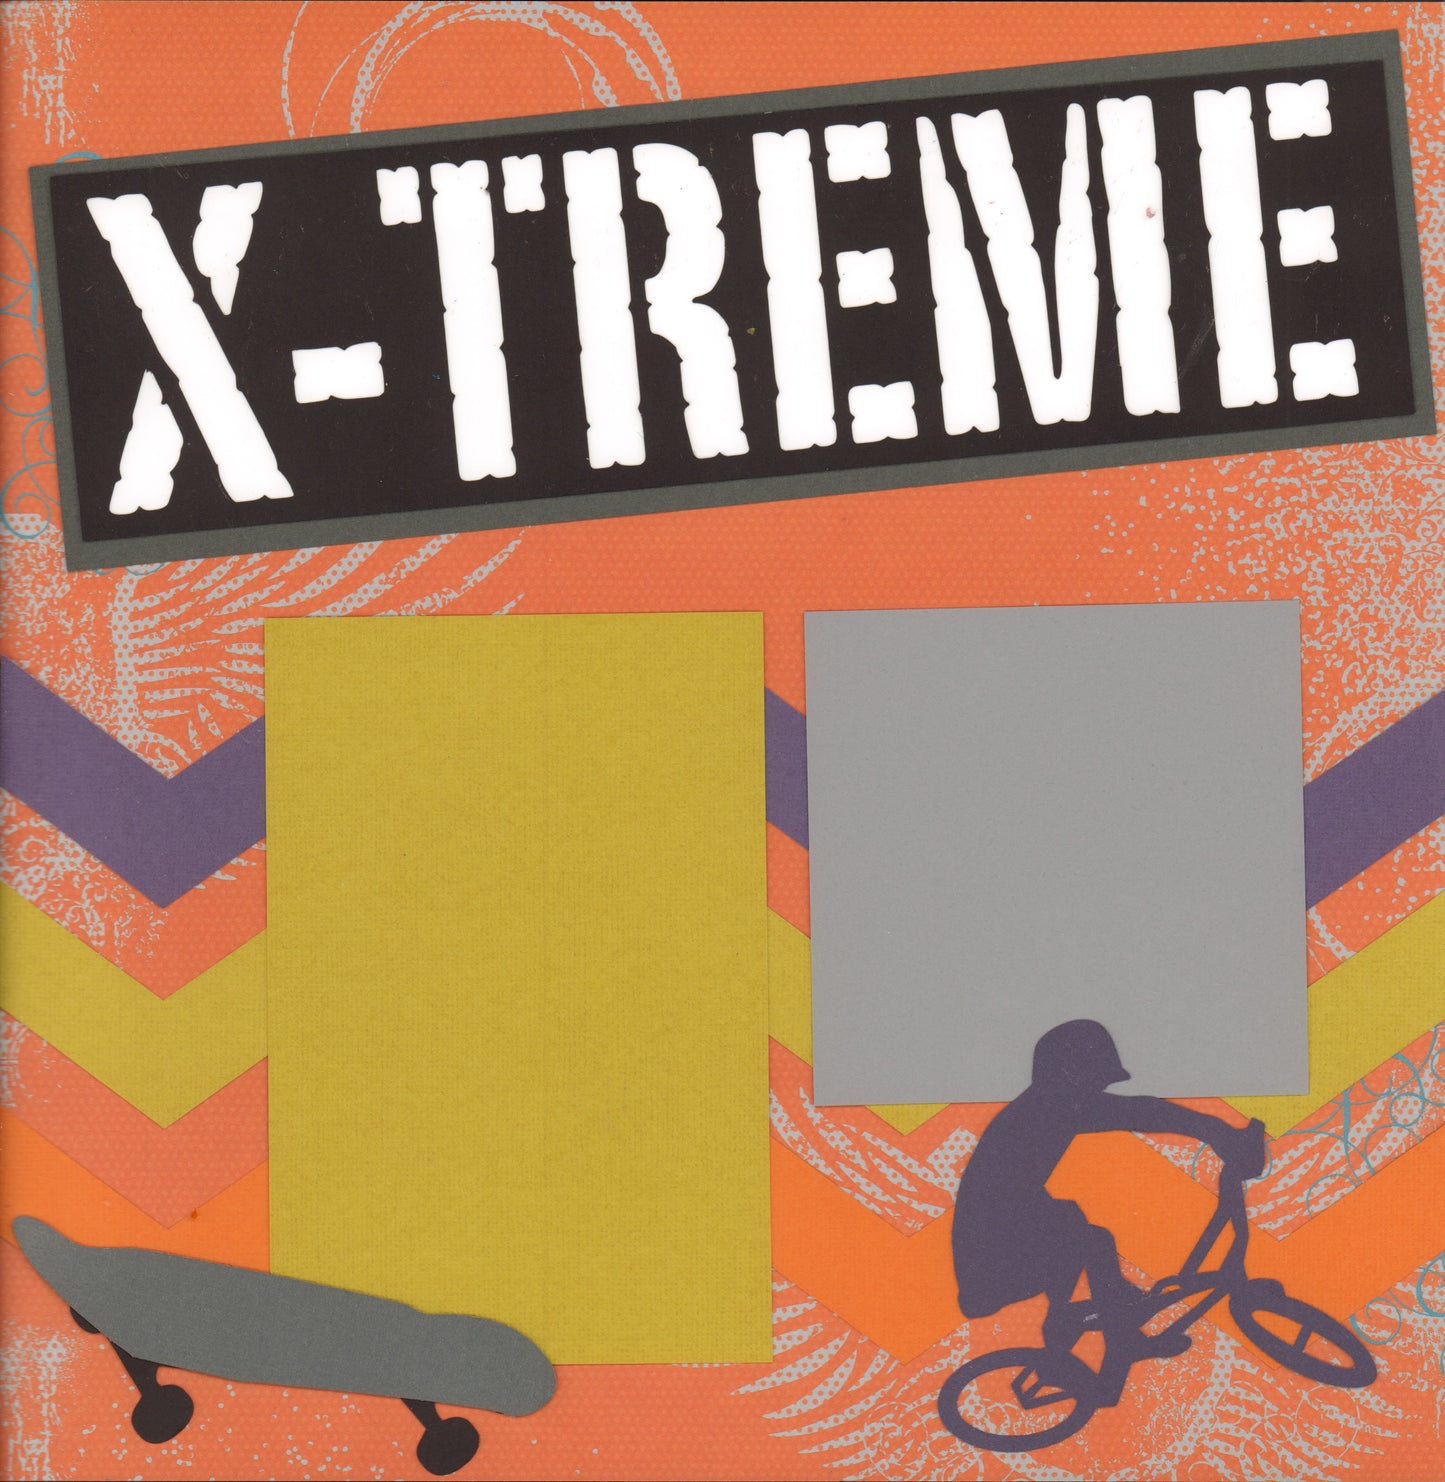 X-treme boys layout kit